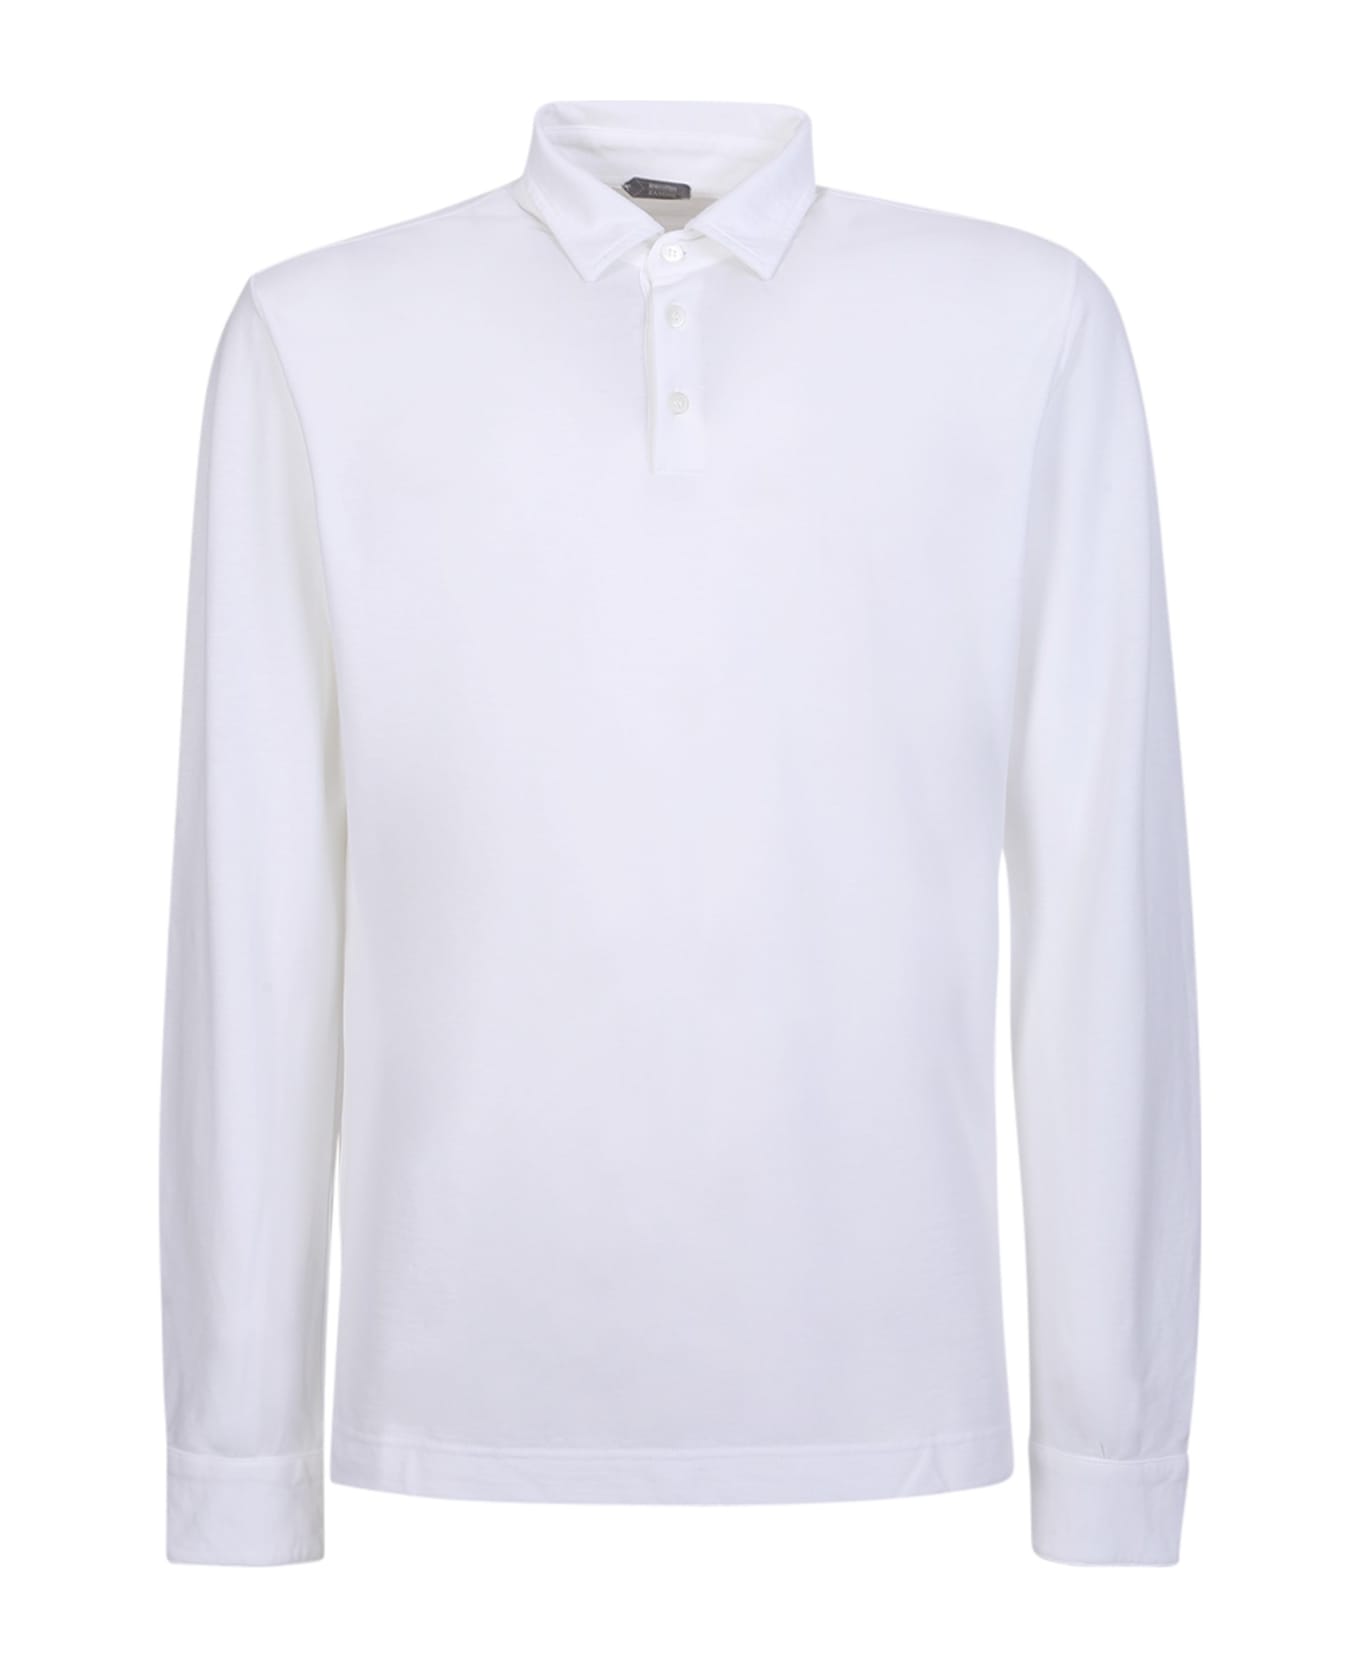 Zanone Long Sleeved White Polo Shirt - White